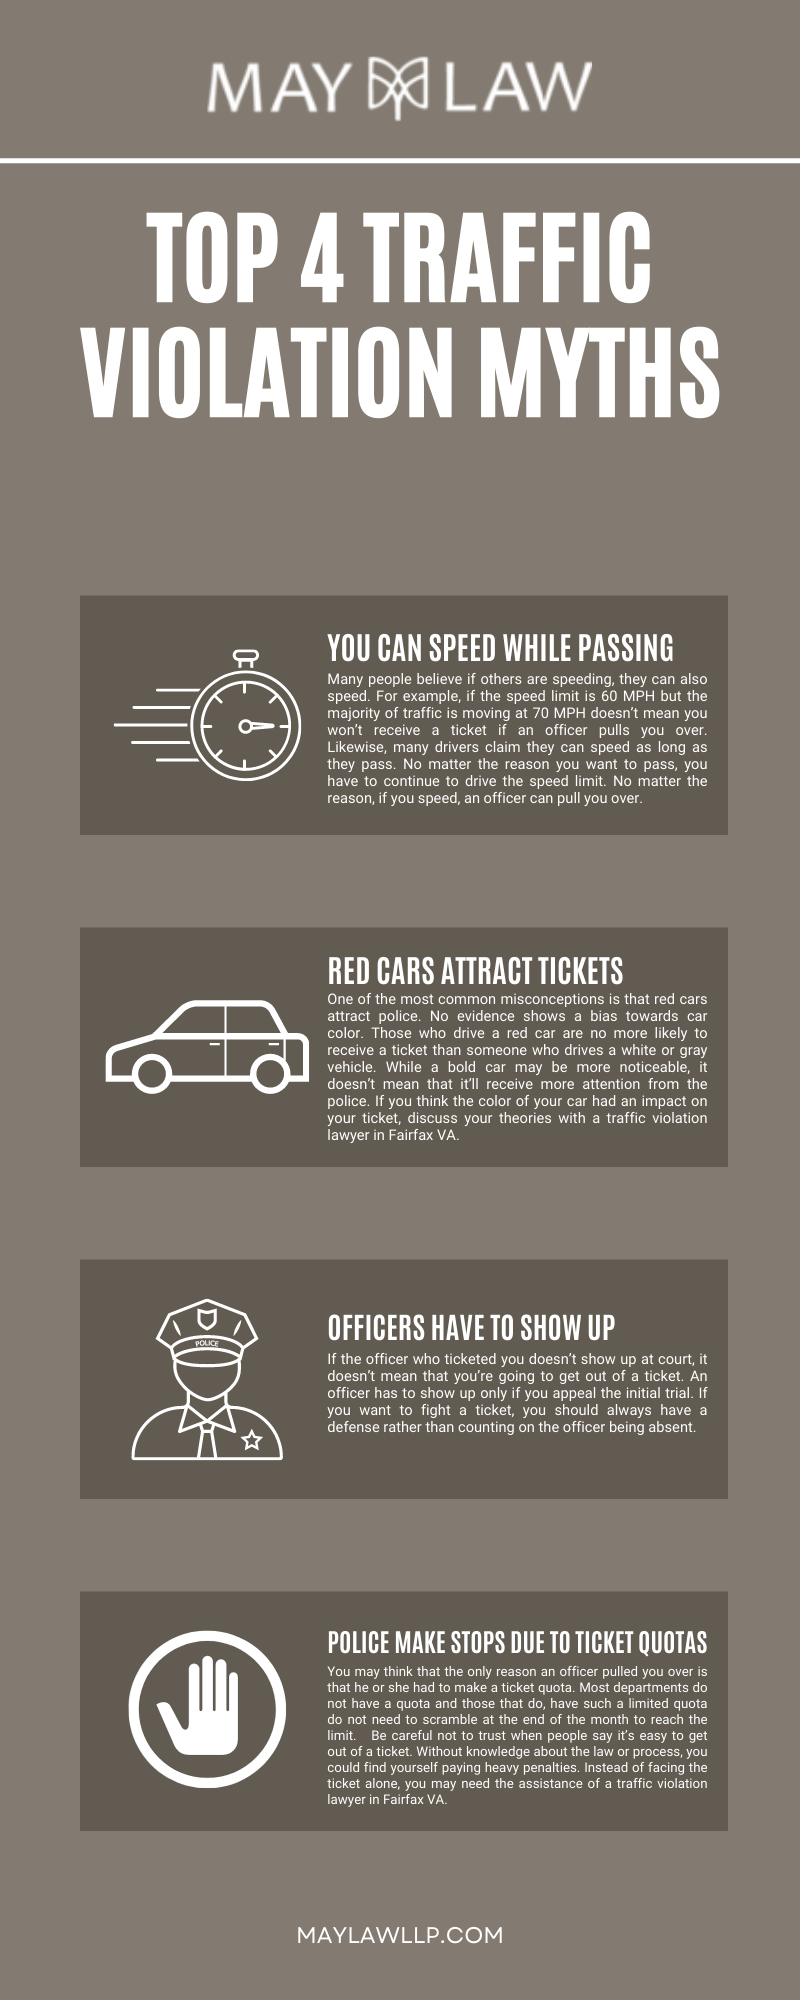 Top 4 Traffic Violation Myths